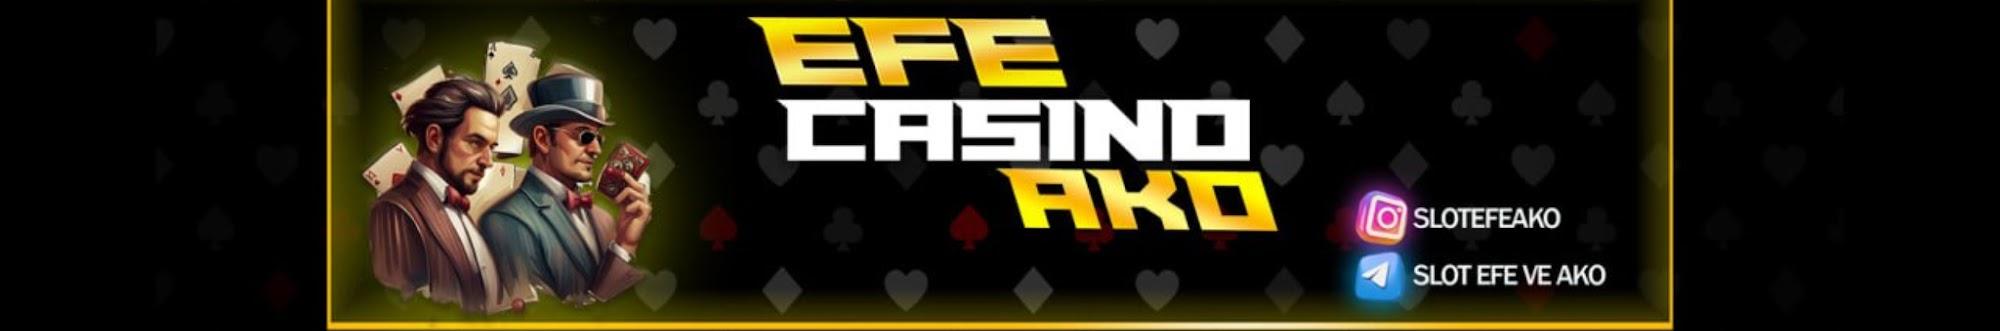 Casino Efe Ako vip